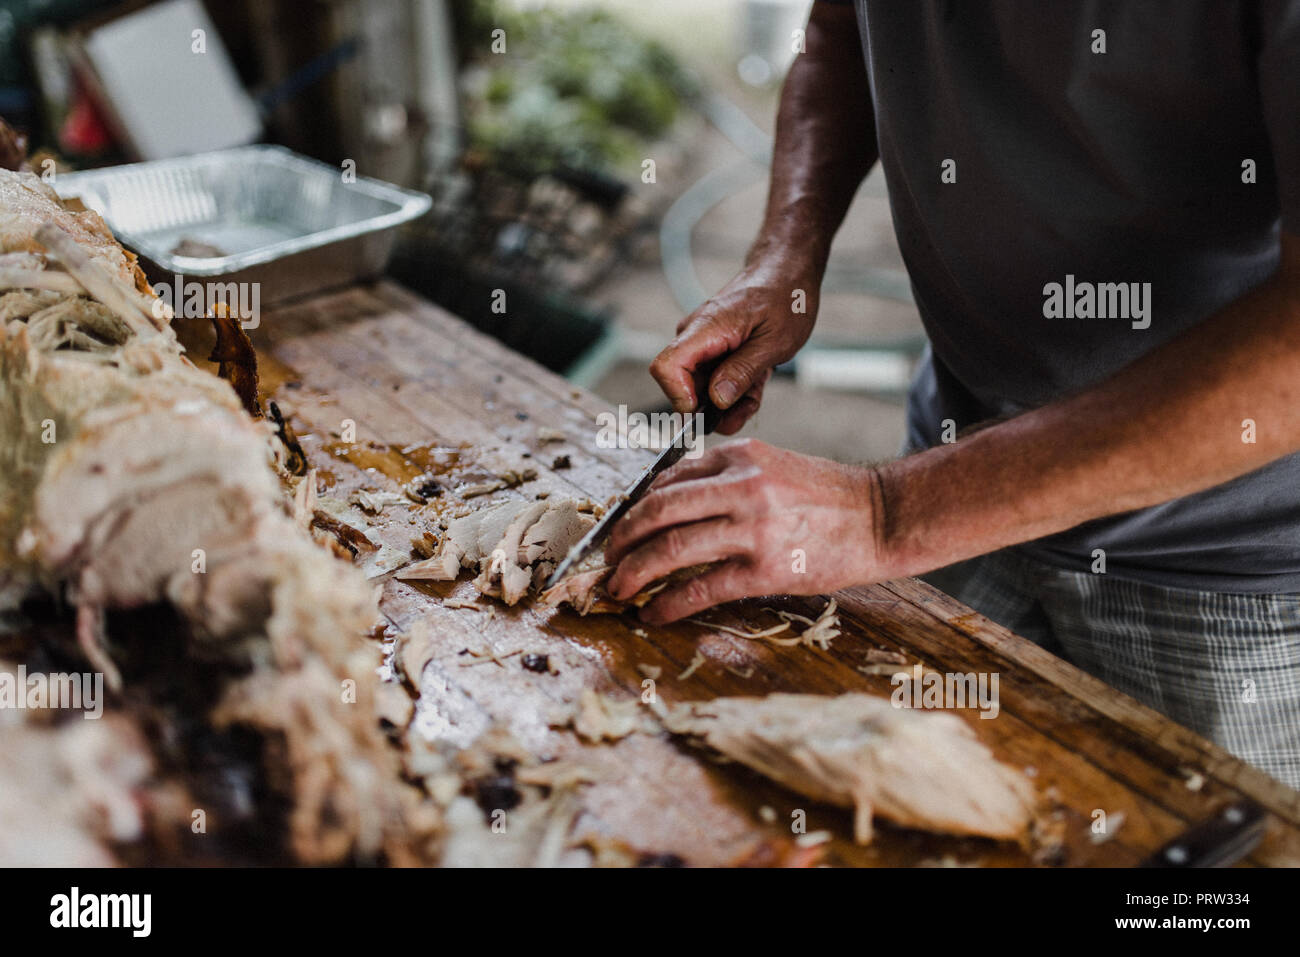 Man slicing hog roast on table, cropped Stock Photo